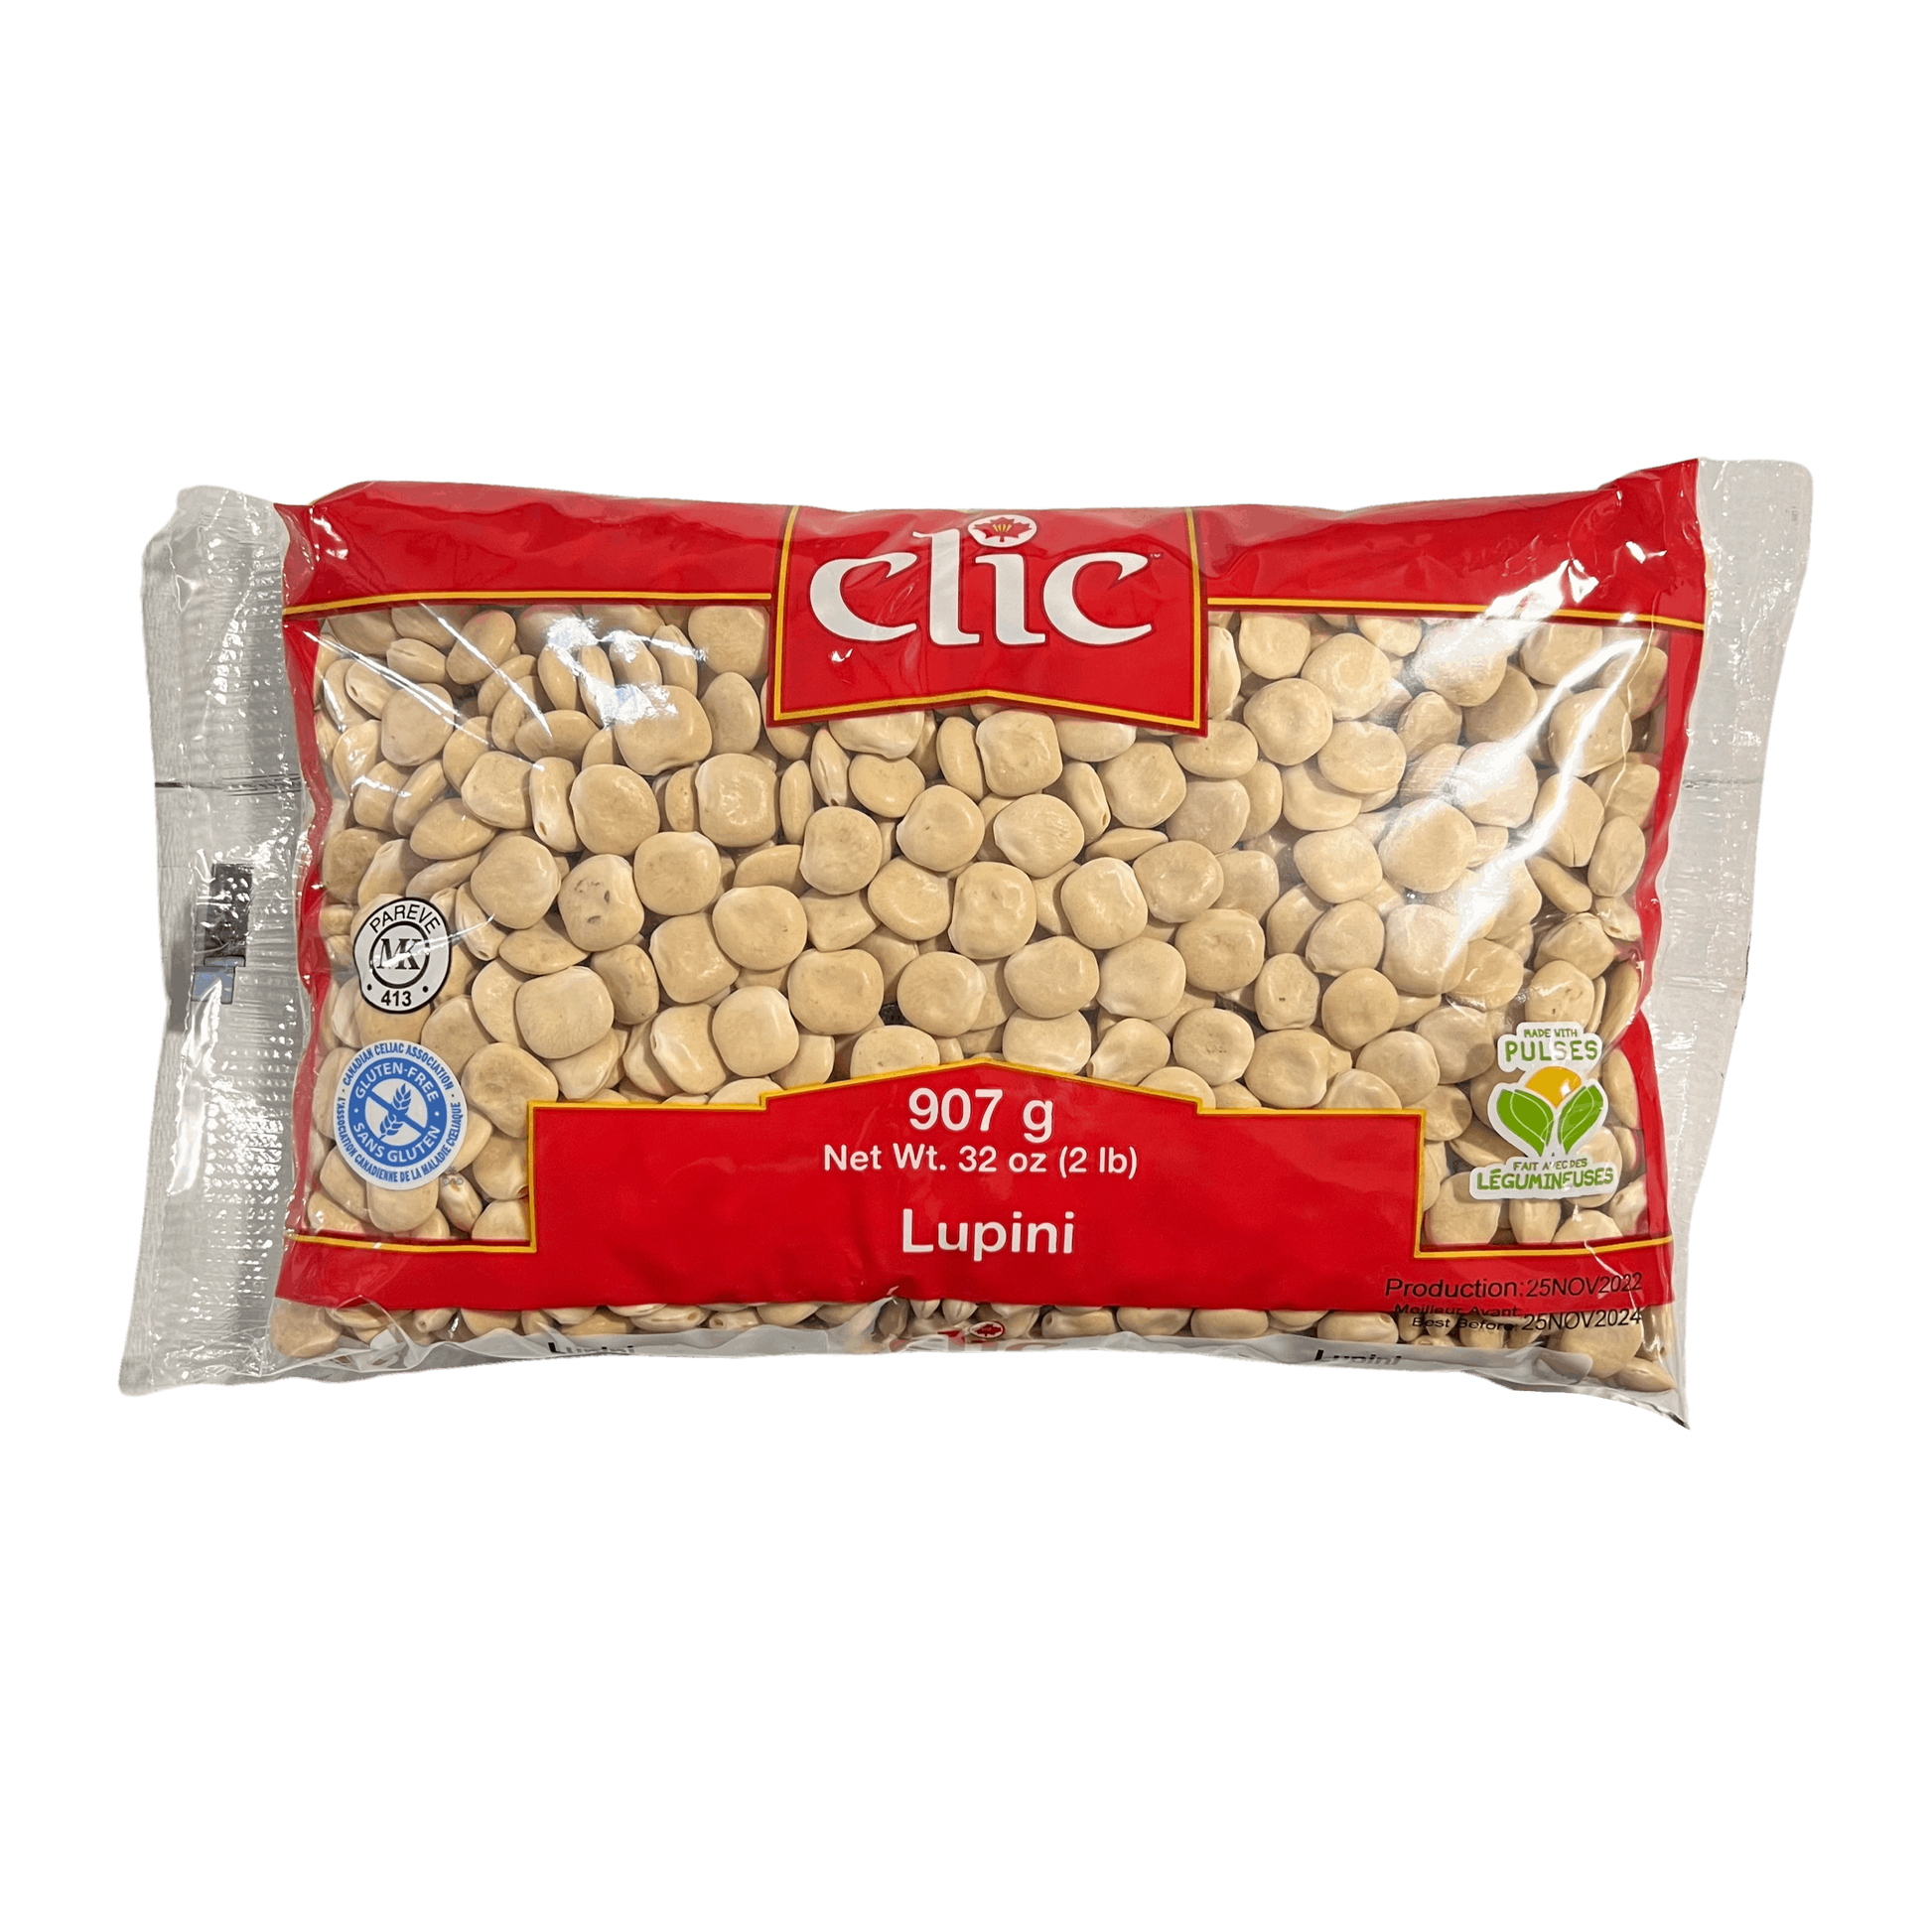 Clic Lupini Beans 907g Damaski